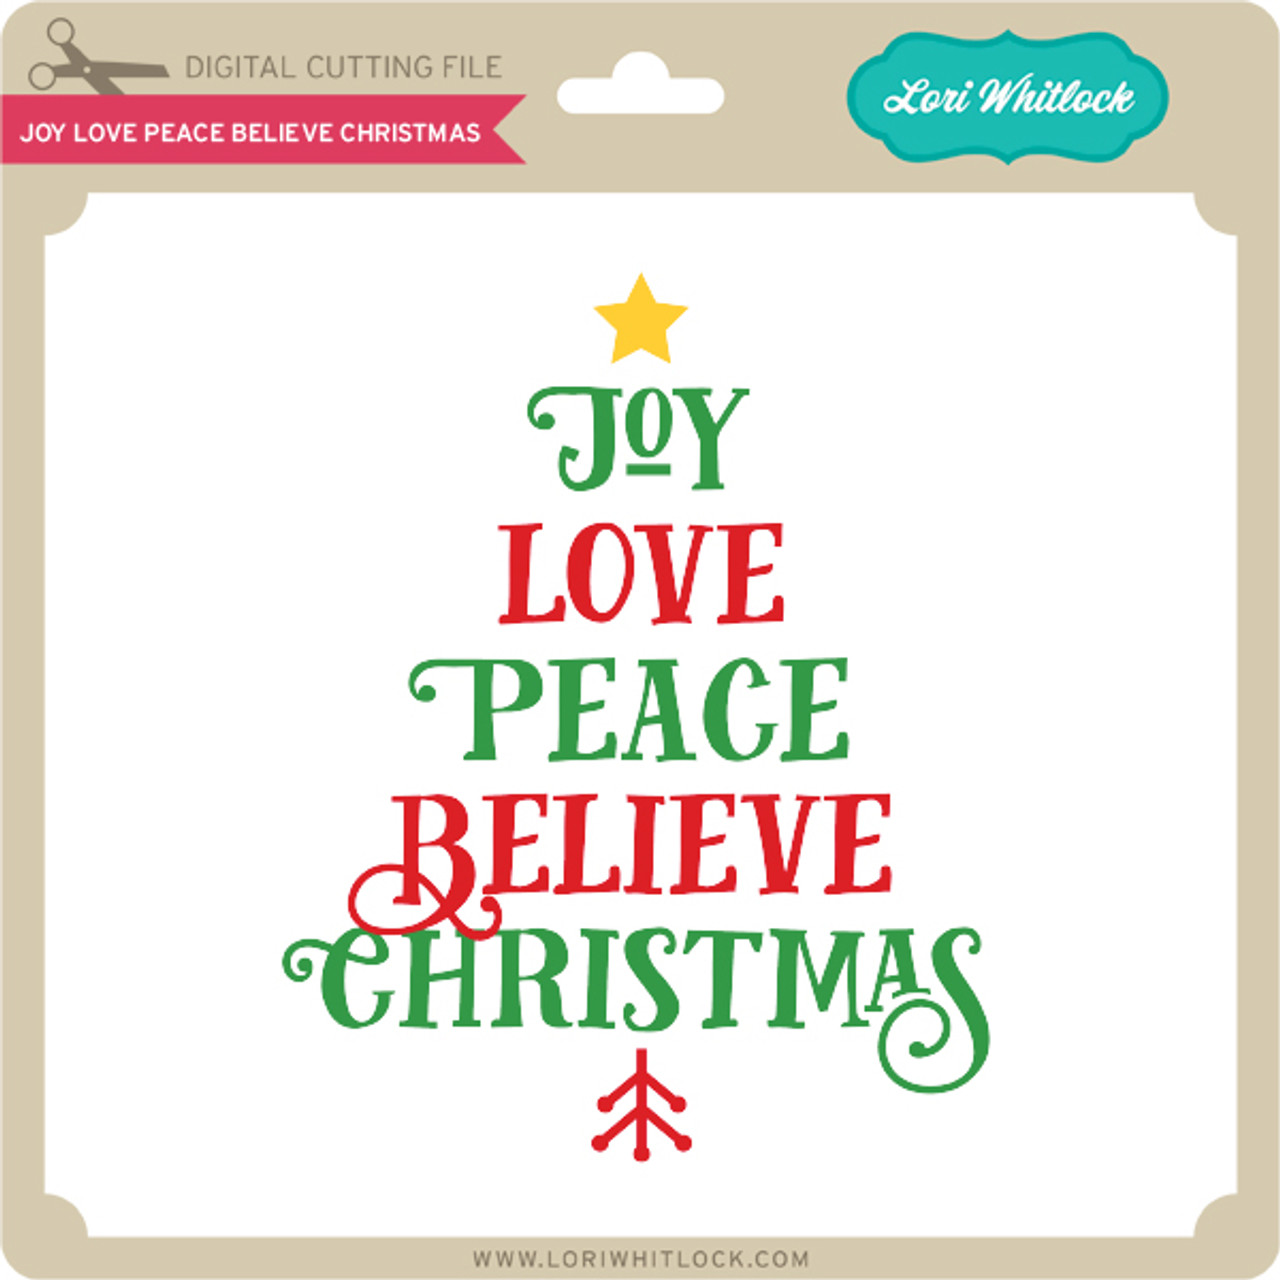 https://cdn11.bigcommerce.com/s-zlf3iiy2/images/stencil/1280x1280/products/8357/8867/LW-Joy-Love-Peace-Believe-Christmas__85304.1510645508.jpg?c=2